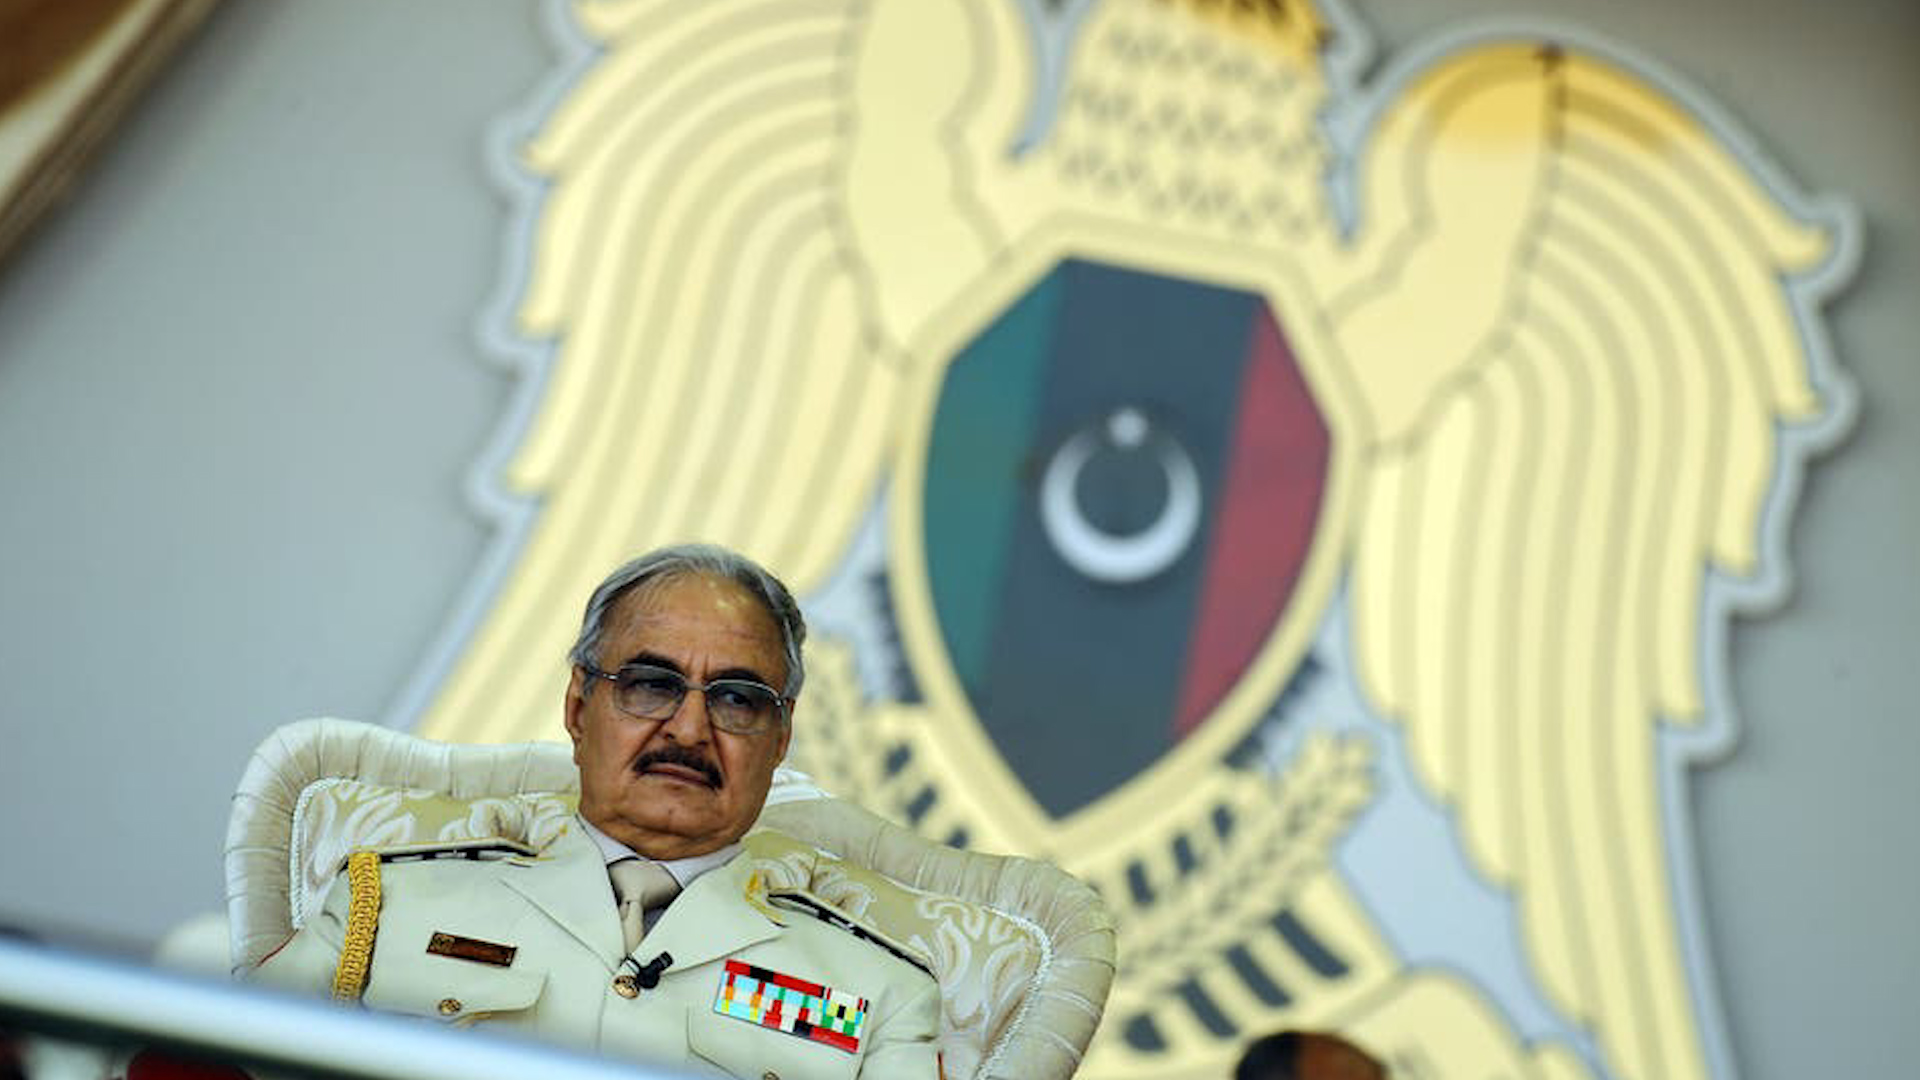 Халифа хафтар. Ливийская Национальная армия генерал Хафтар. Маршал Хафтар. Халиф Хафтар Ливия.